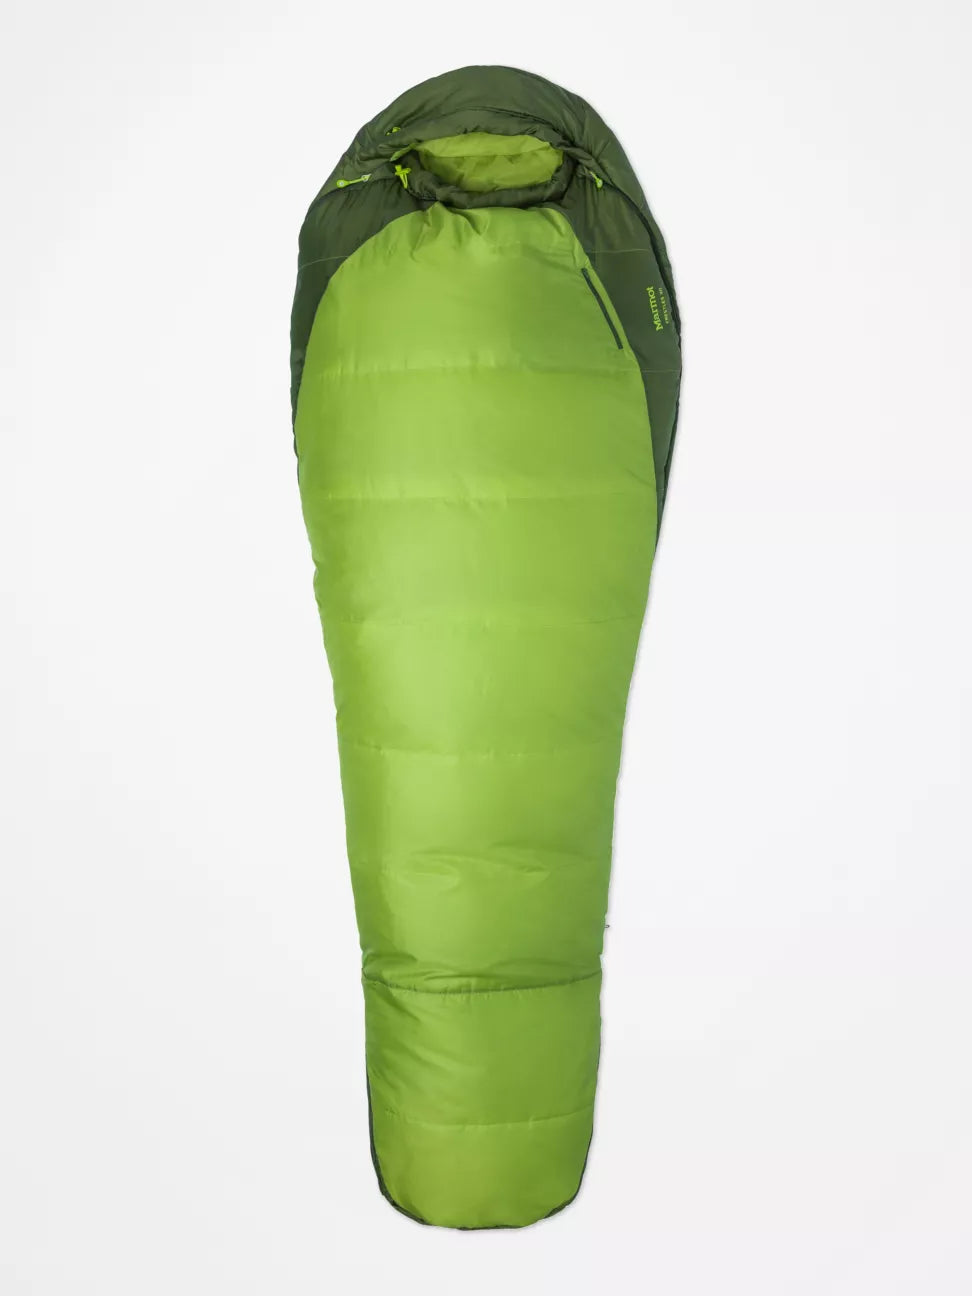 Full zip bright green mummy bag, unisex 30 degree 